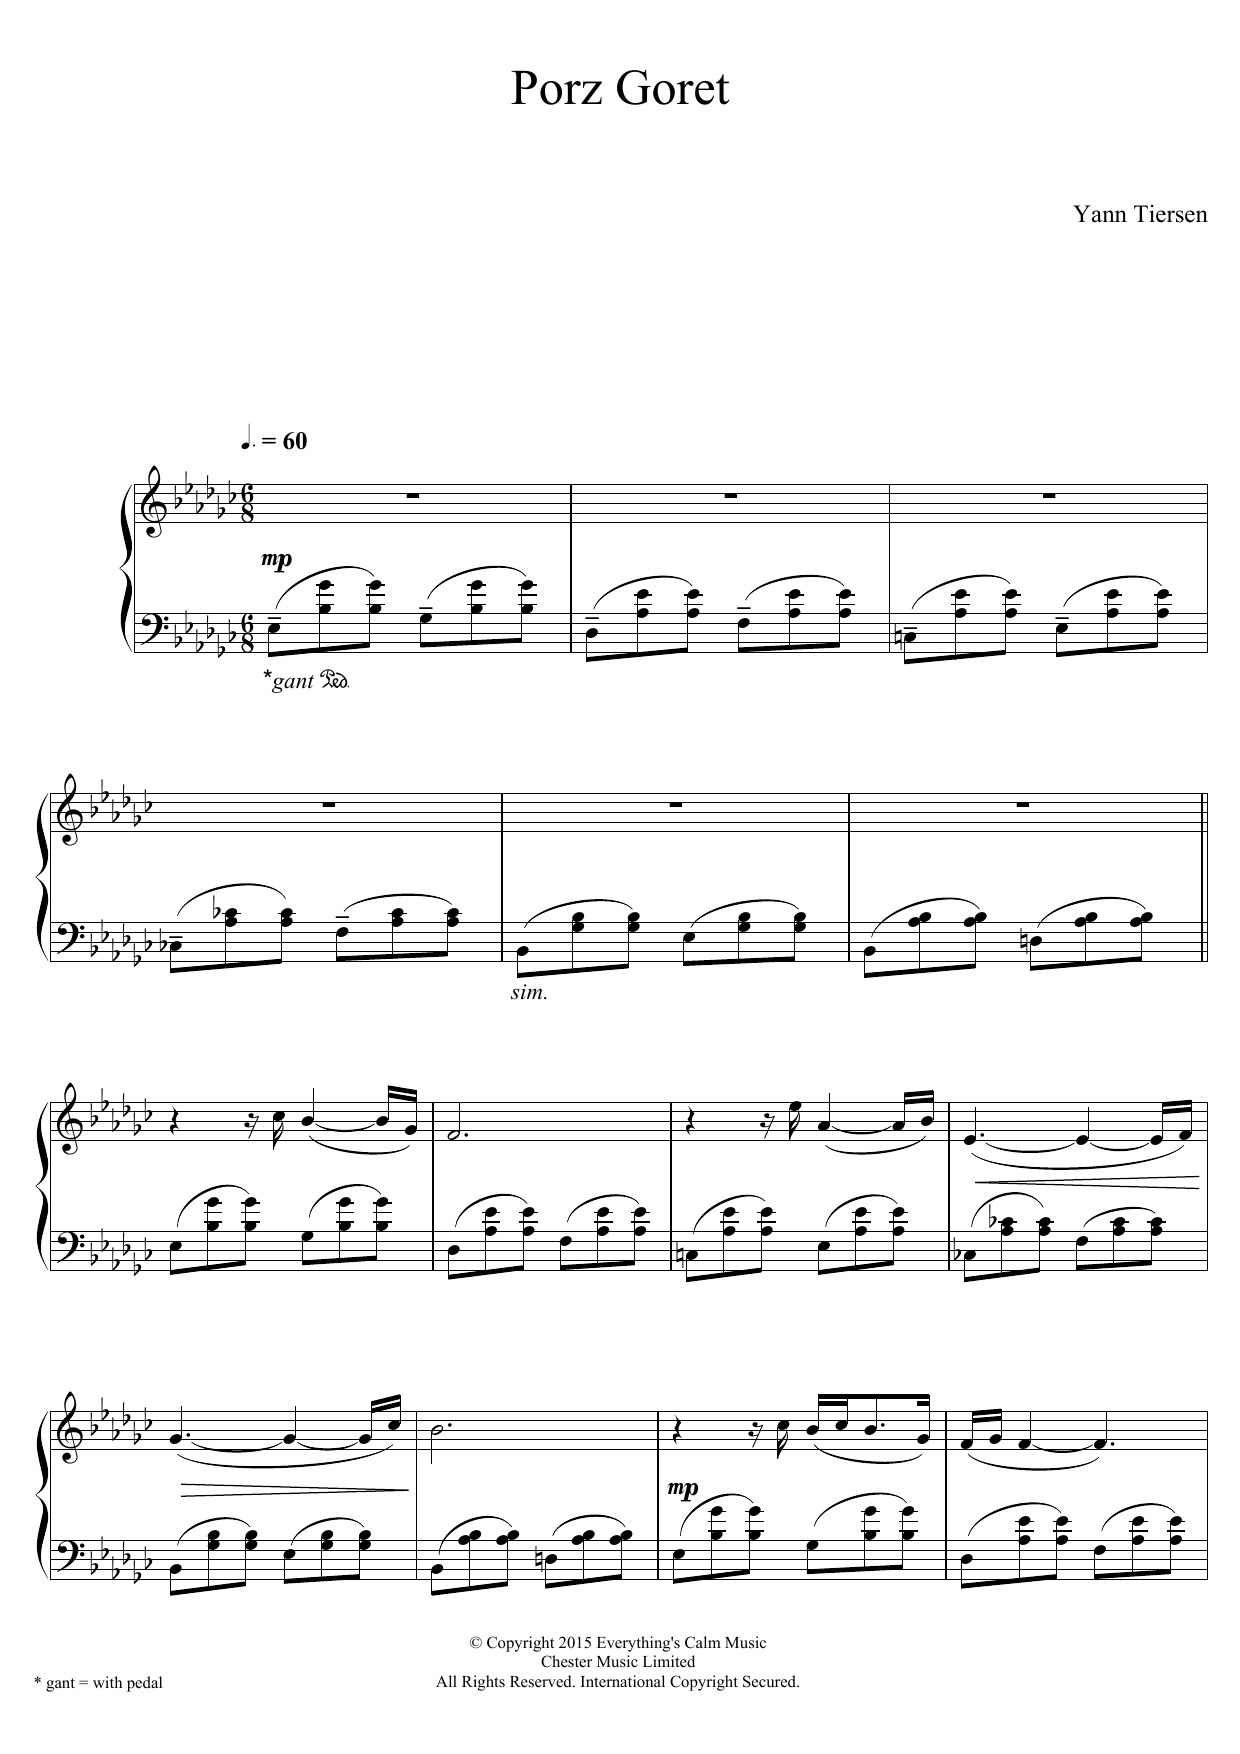 Yann Tiersen Porz Goret Sheet Music Notes & Chords for Piano - Download or Print PDF